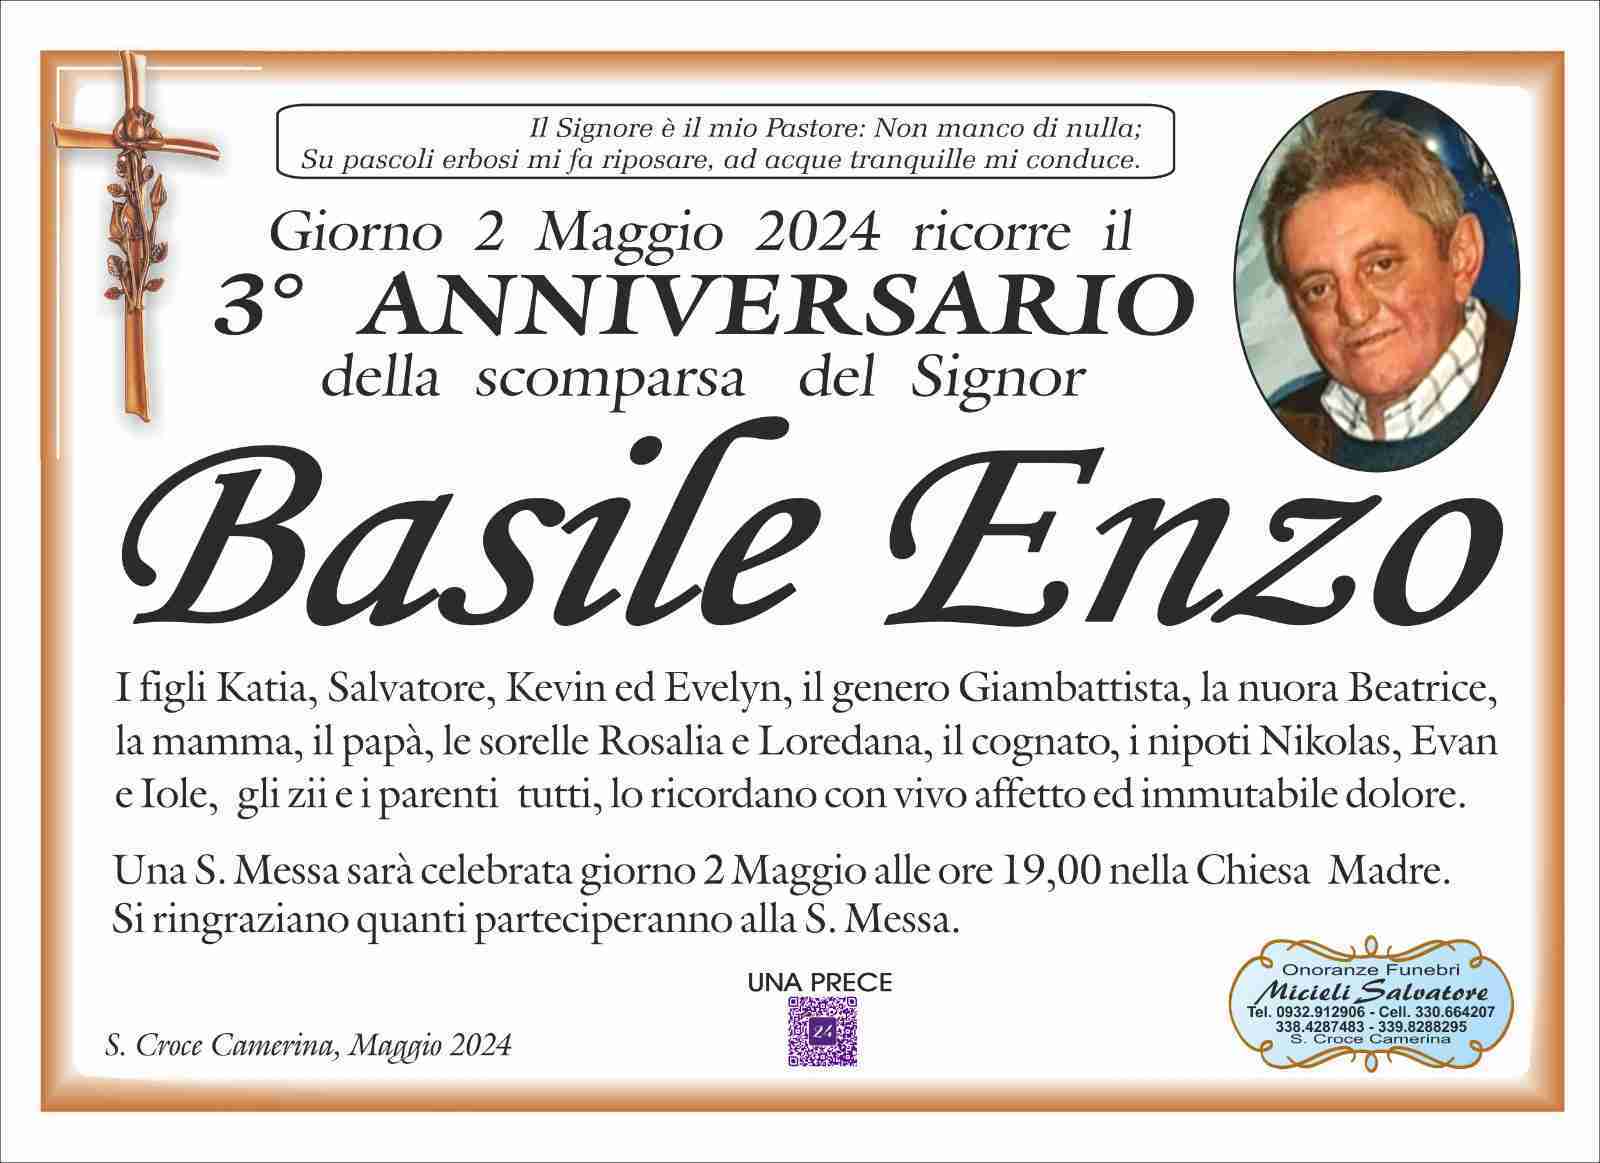 Enzo Basile